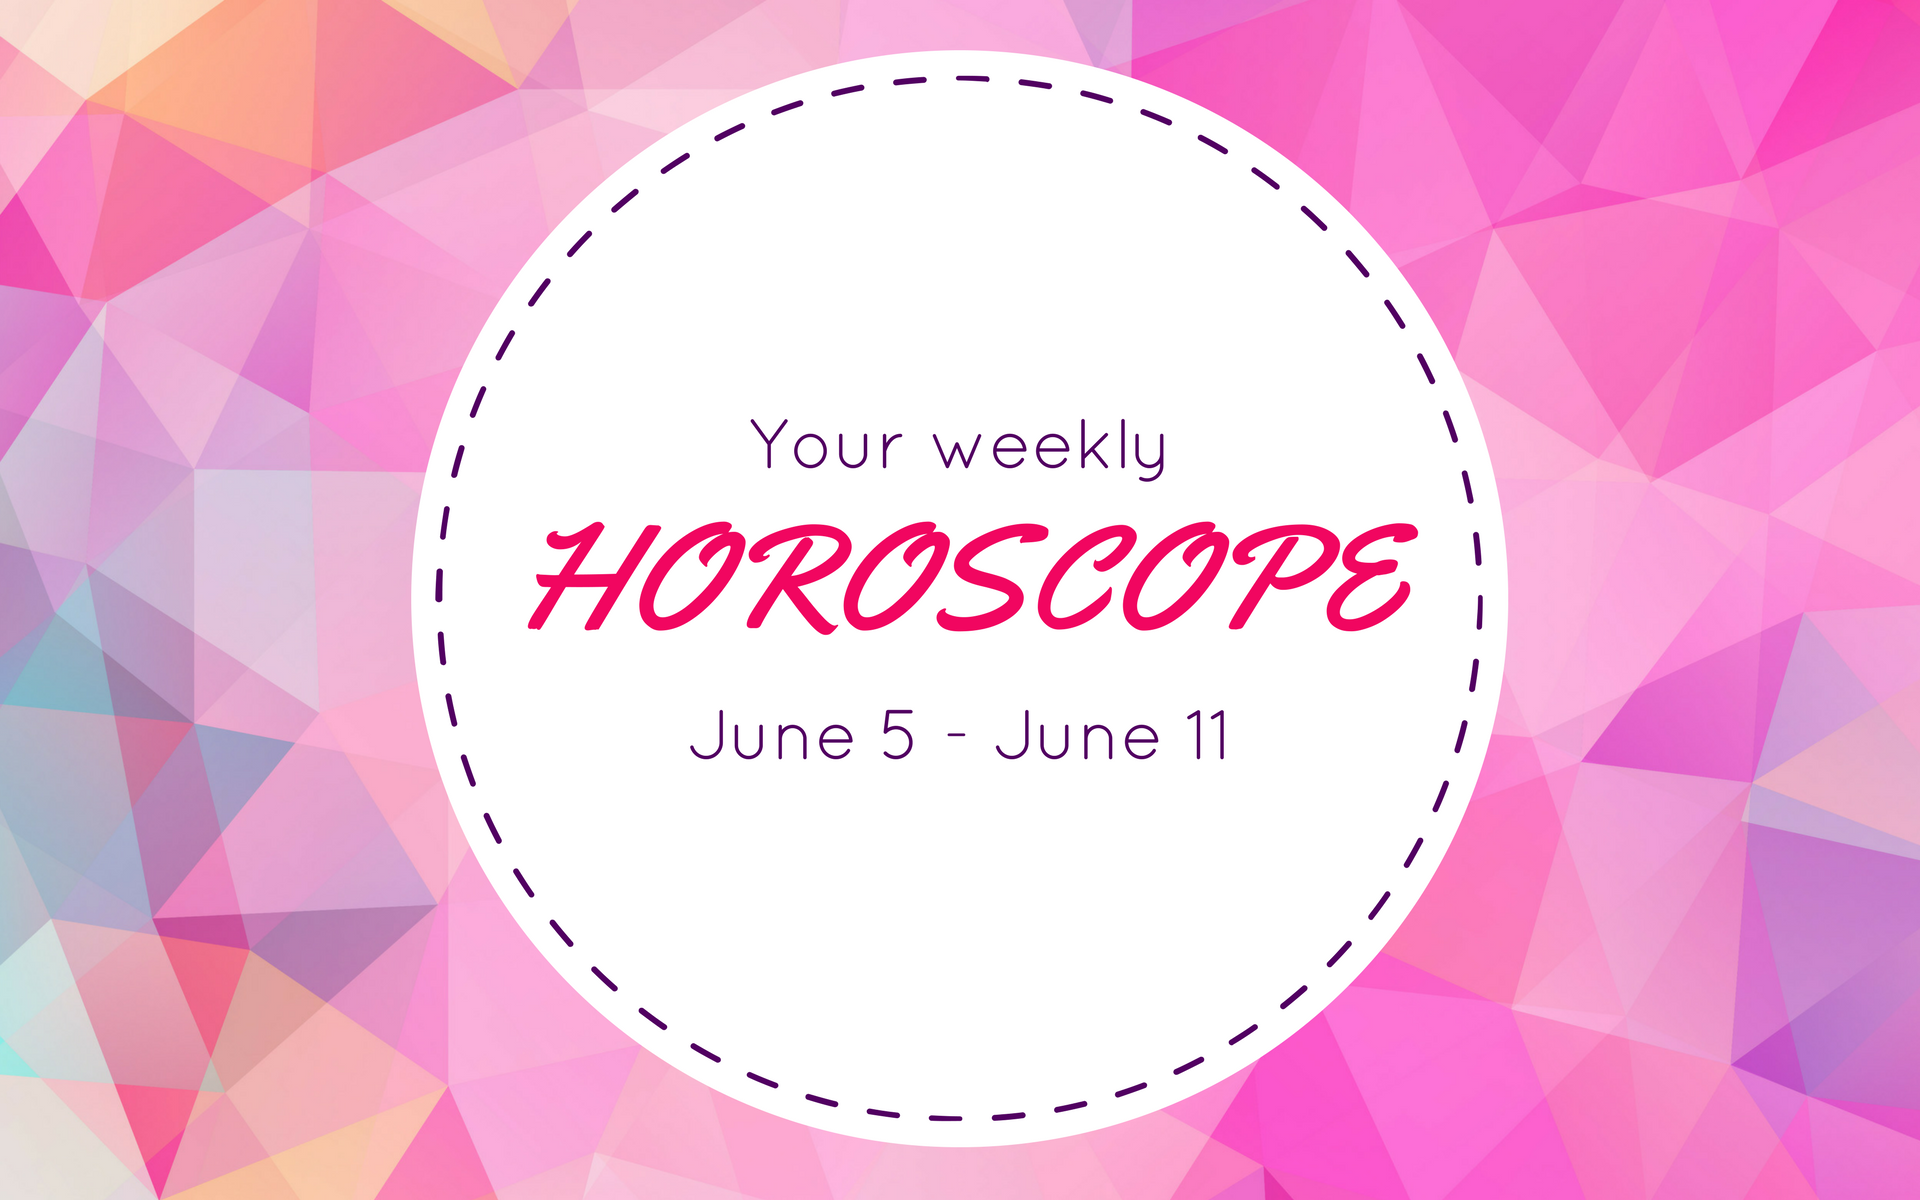 Your Weekly Horoscope: June 5 - June 11